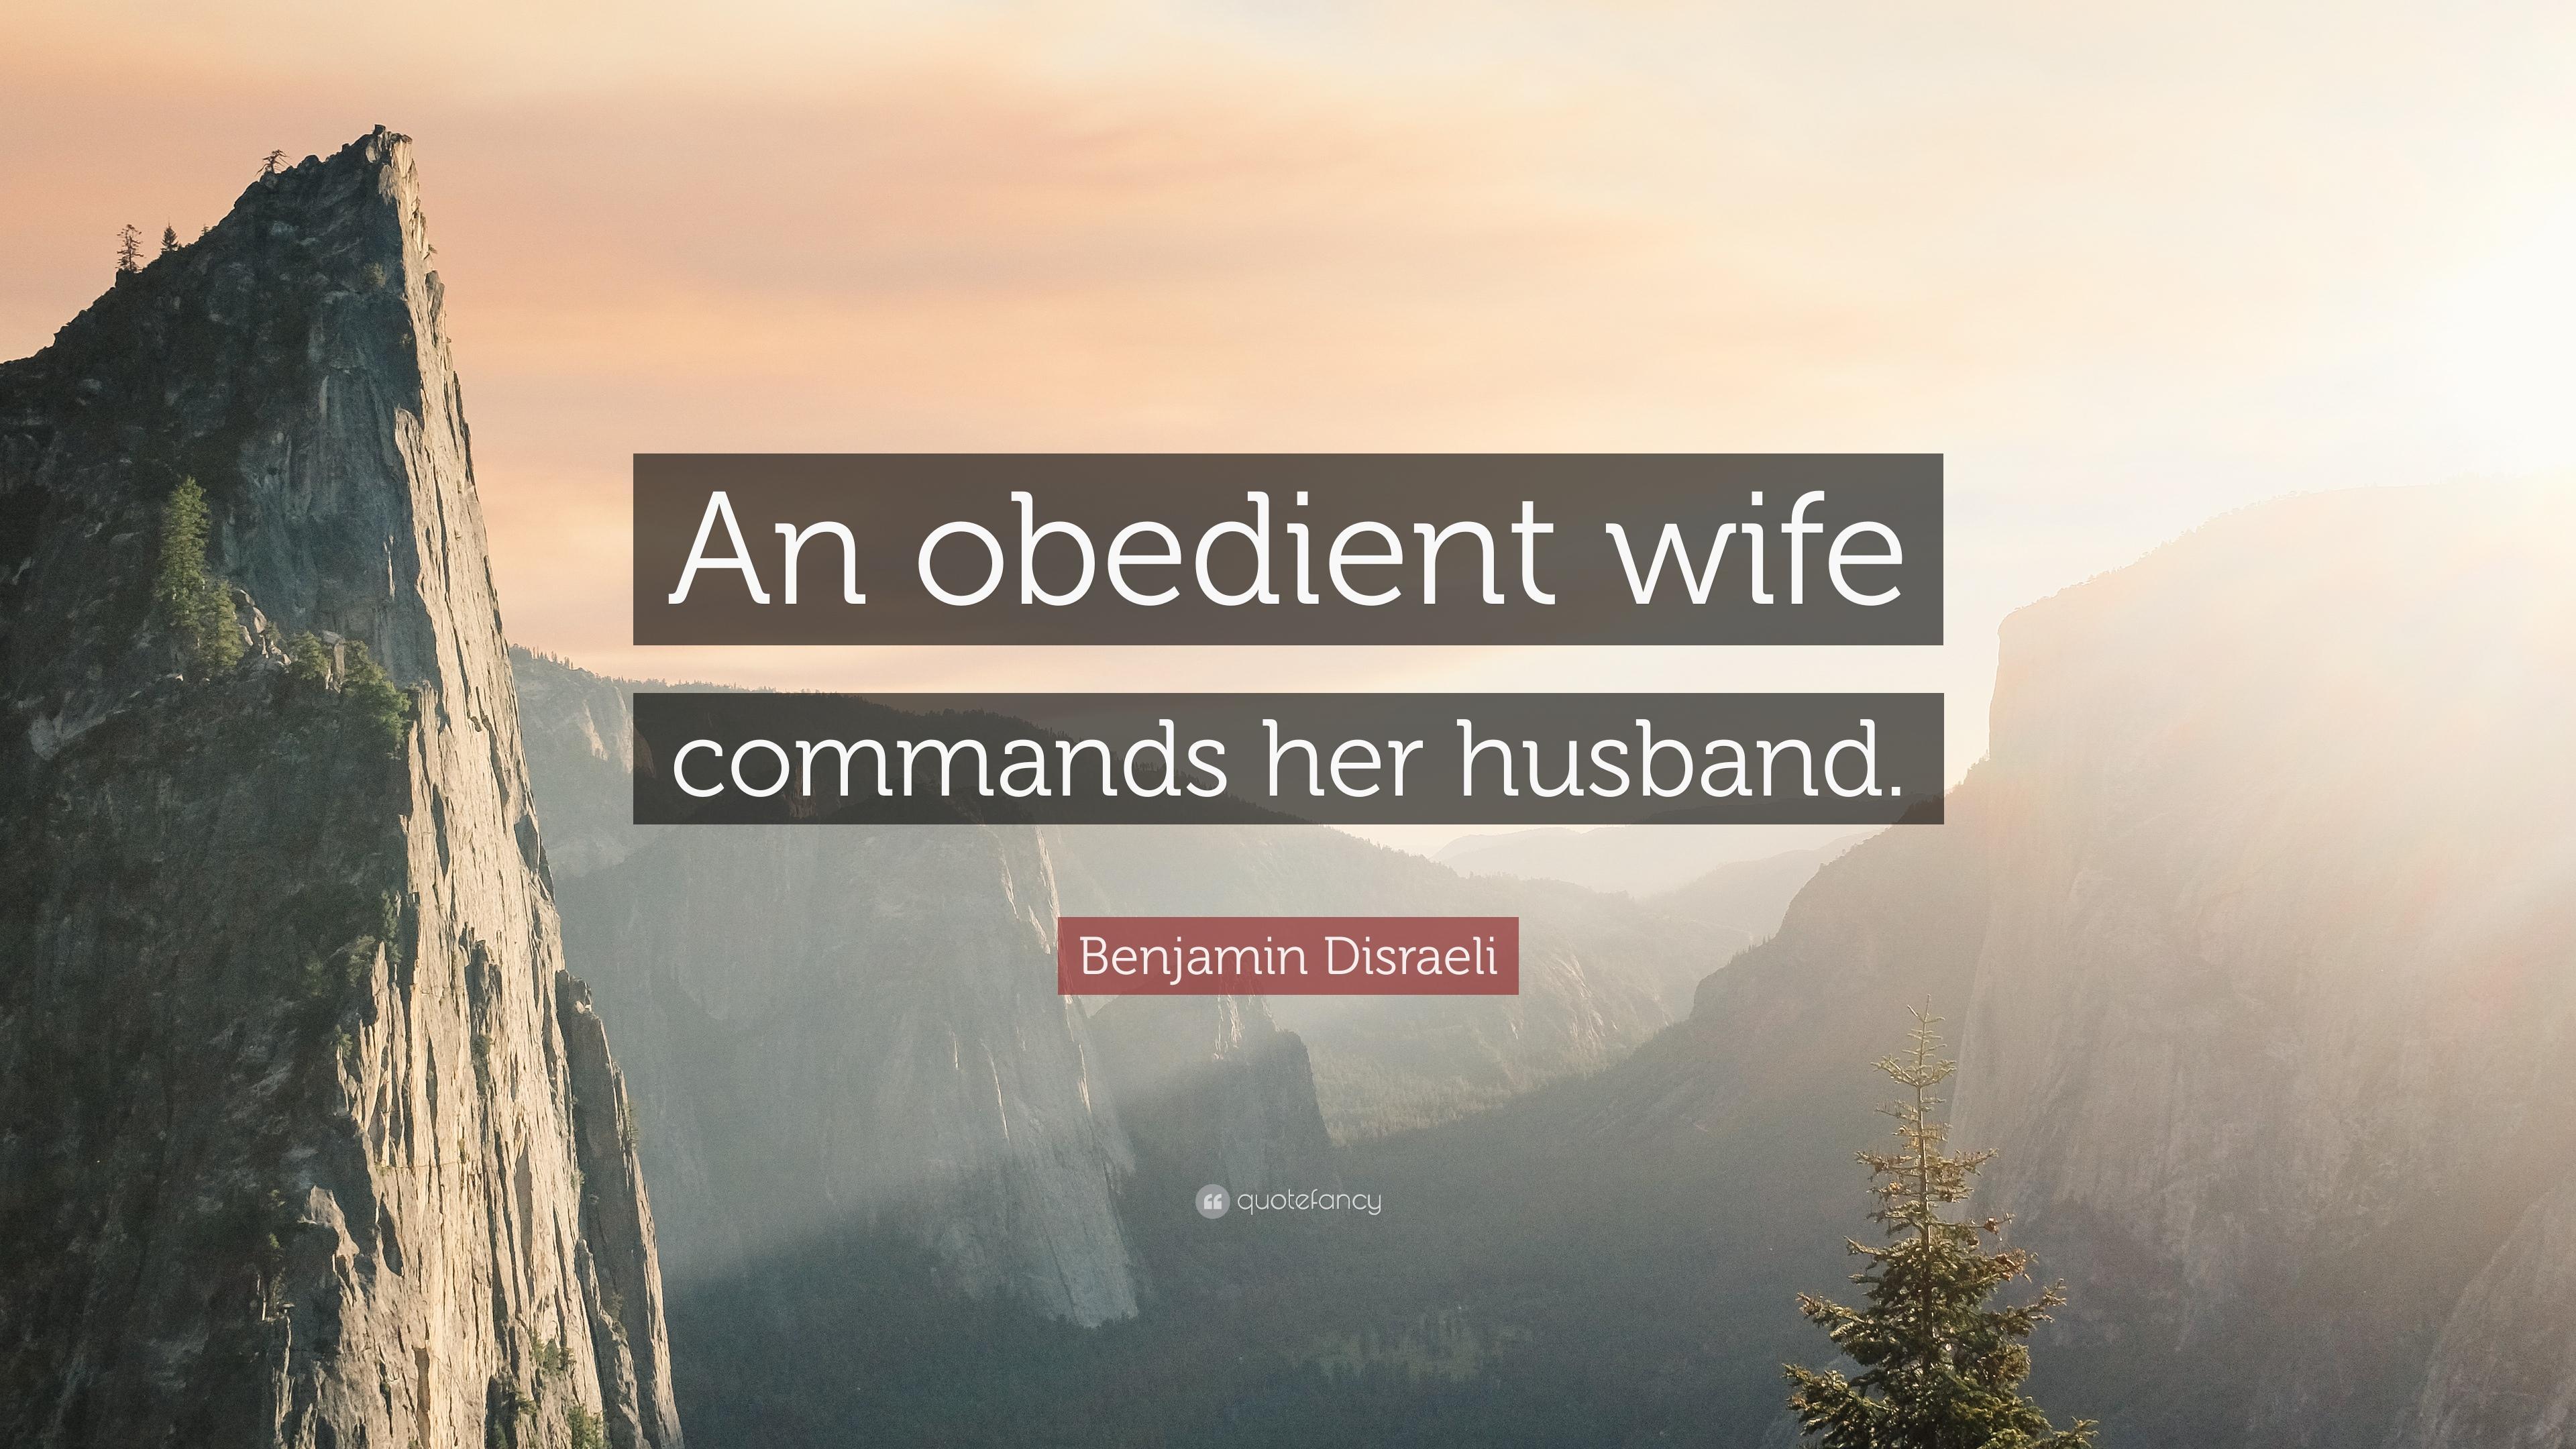 Benjamin Disraeli Quote: “An obedient wife commands her husband